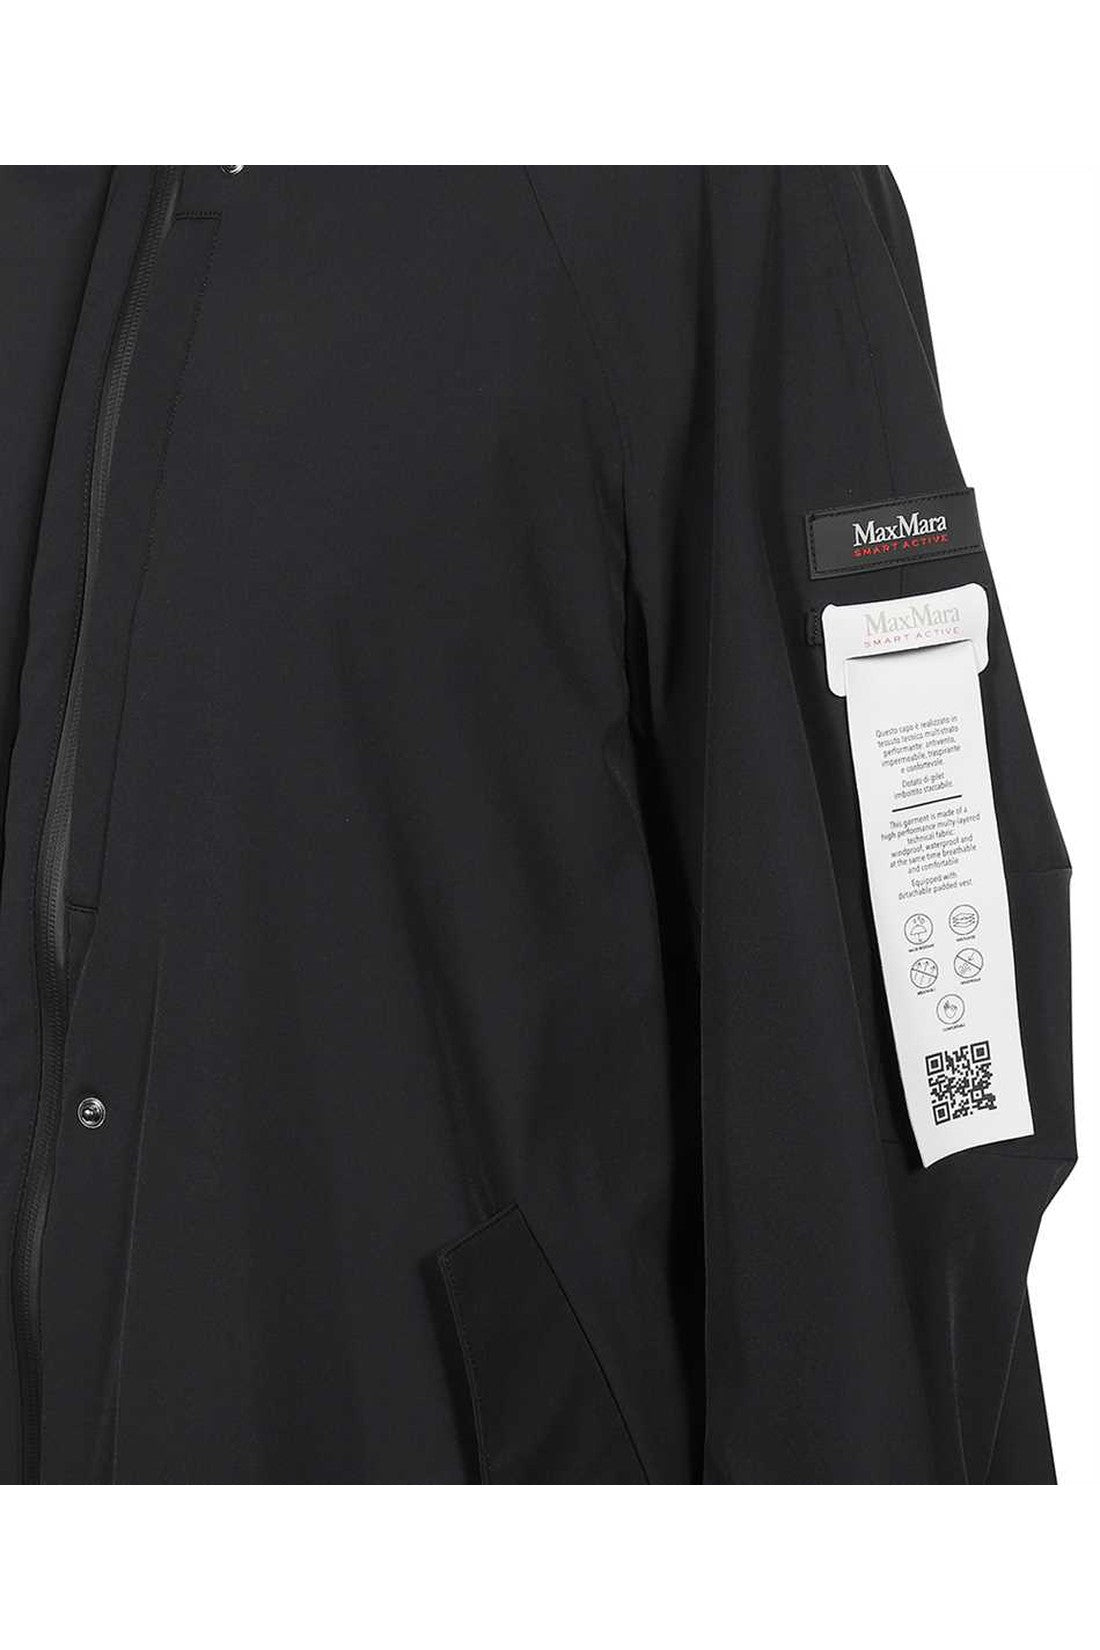 Nylon jacket-Max Mara-OUTLET-SALE-ARCHIVIST